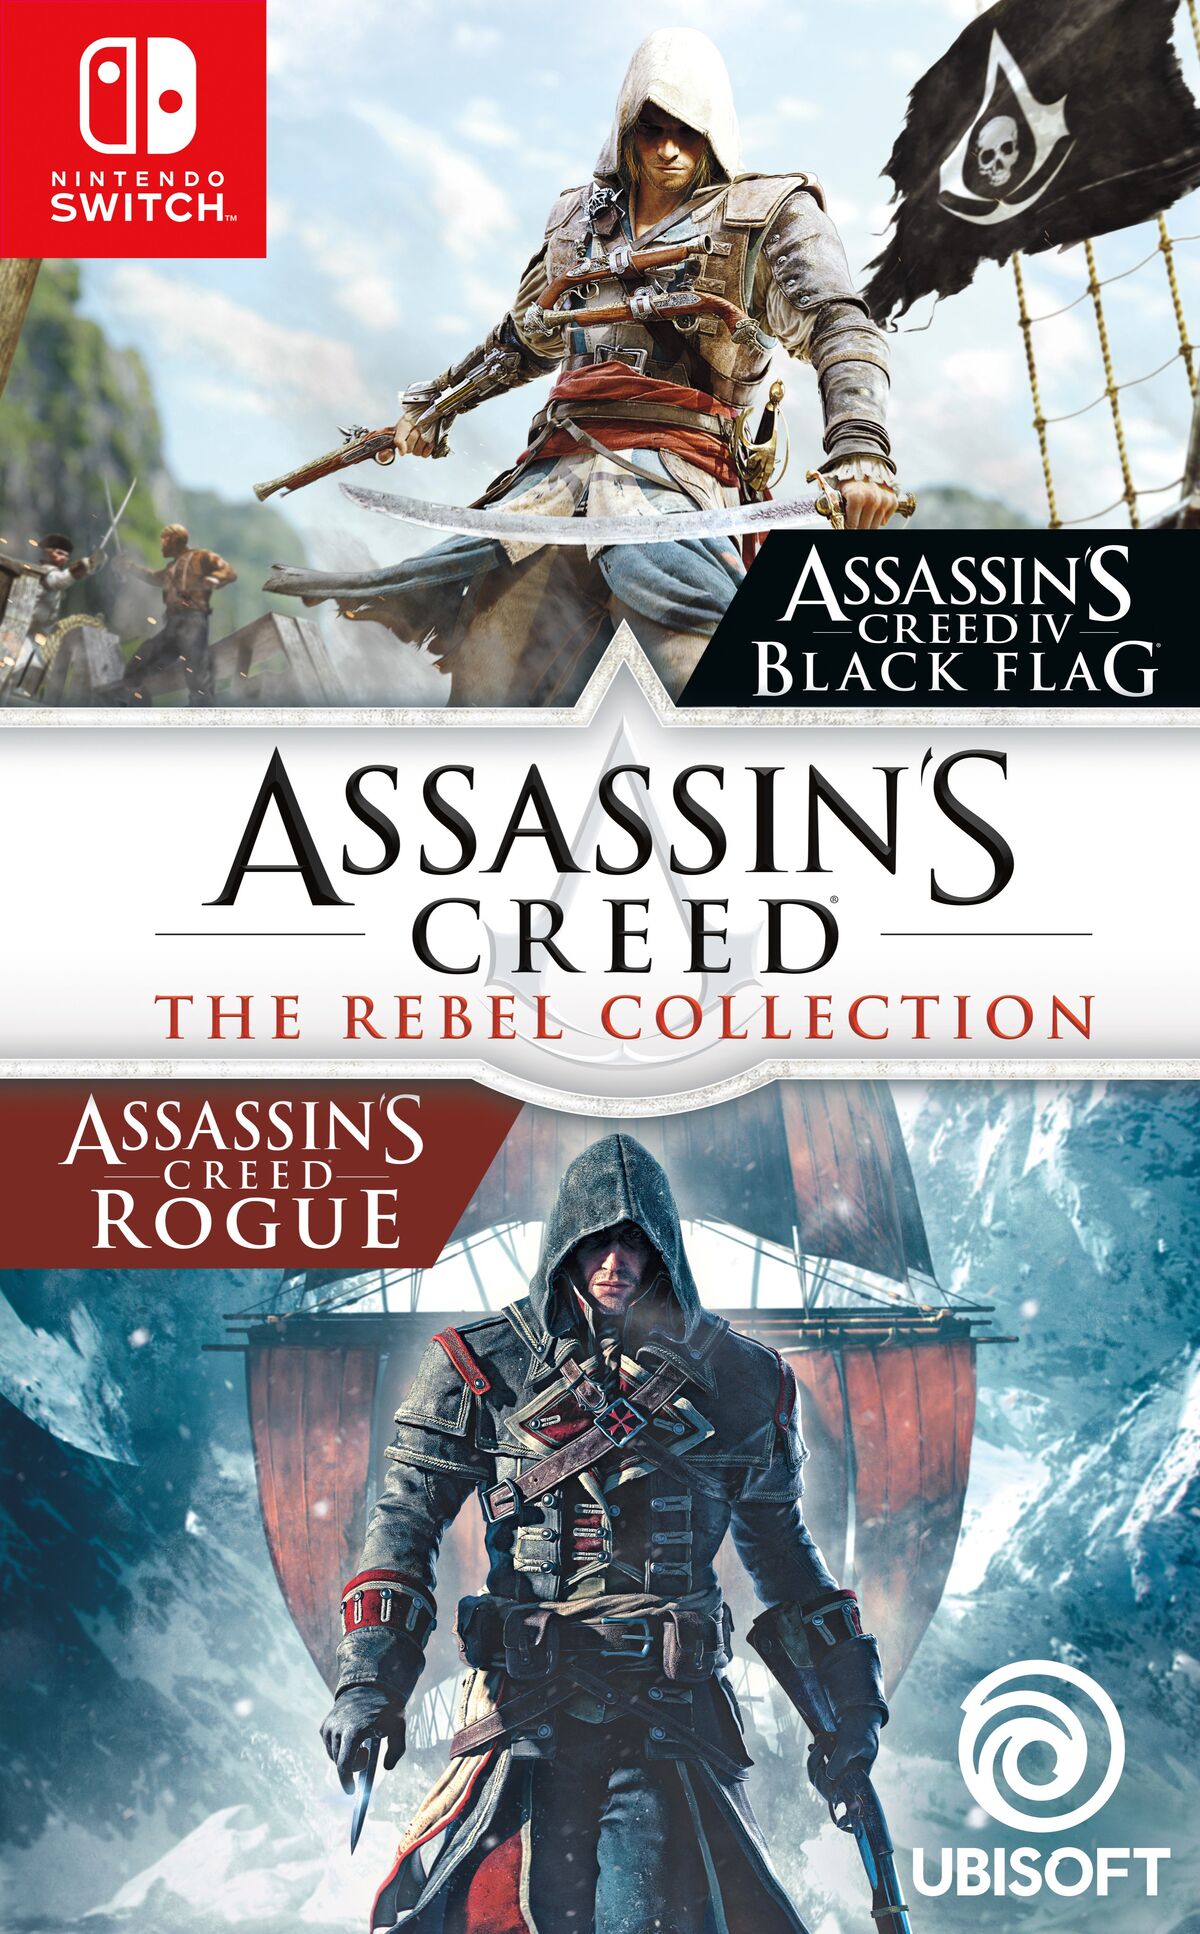 Man-of-War - Assassin's Creed IV: Black Flag Guide - IGN